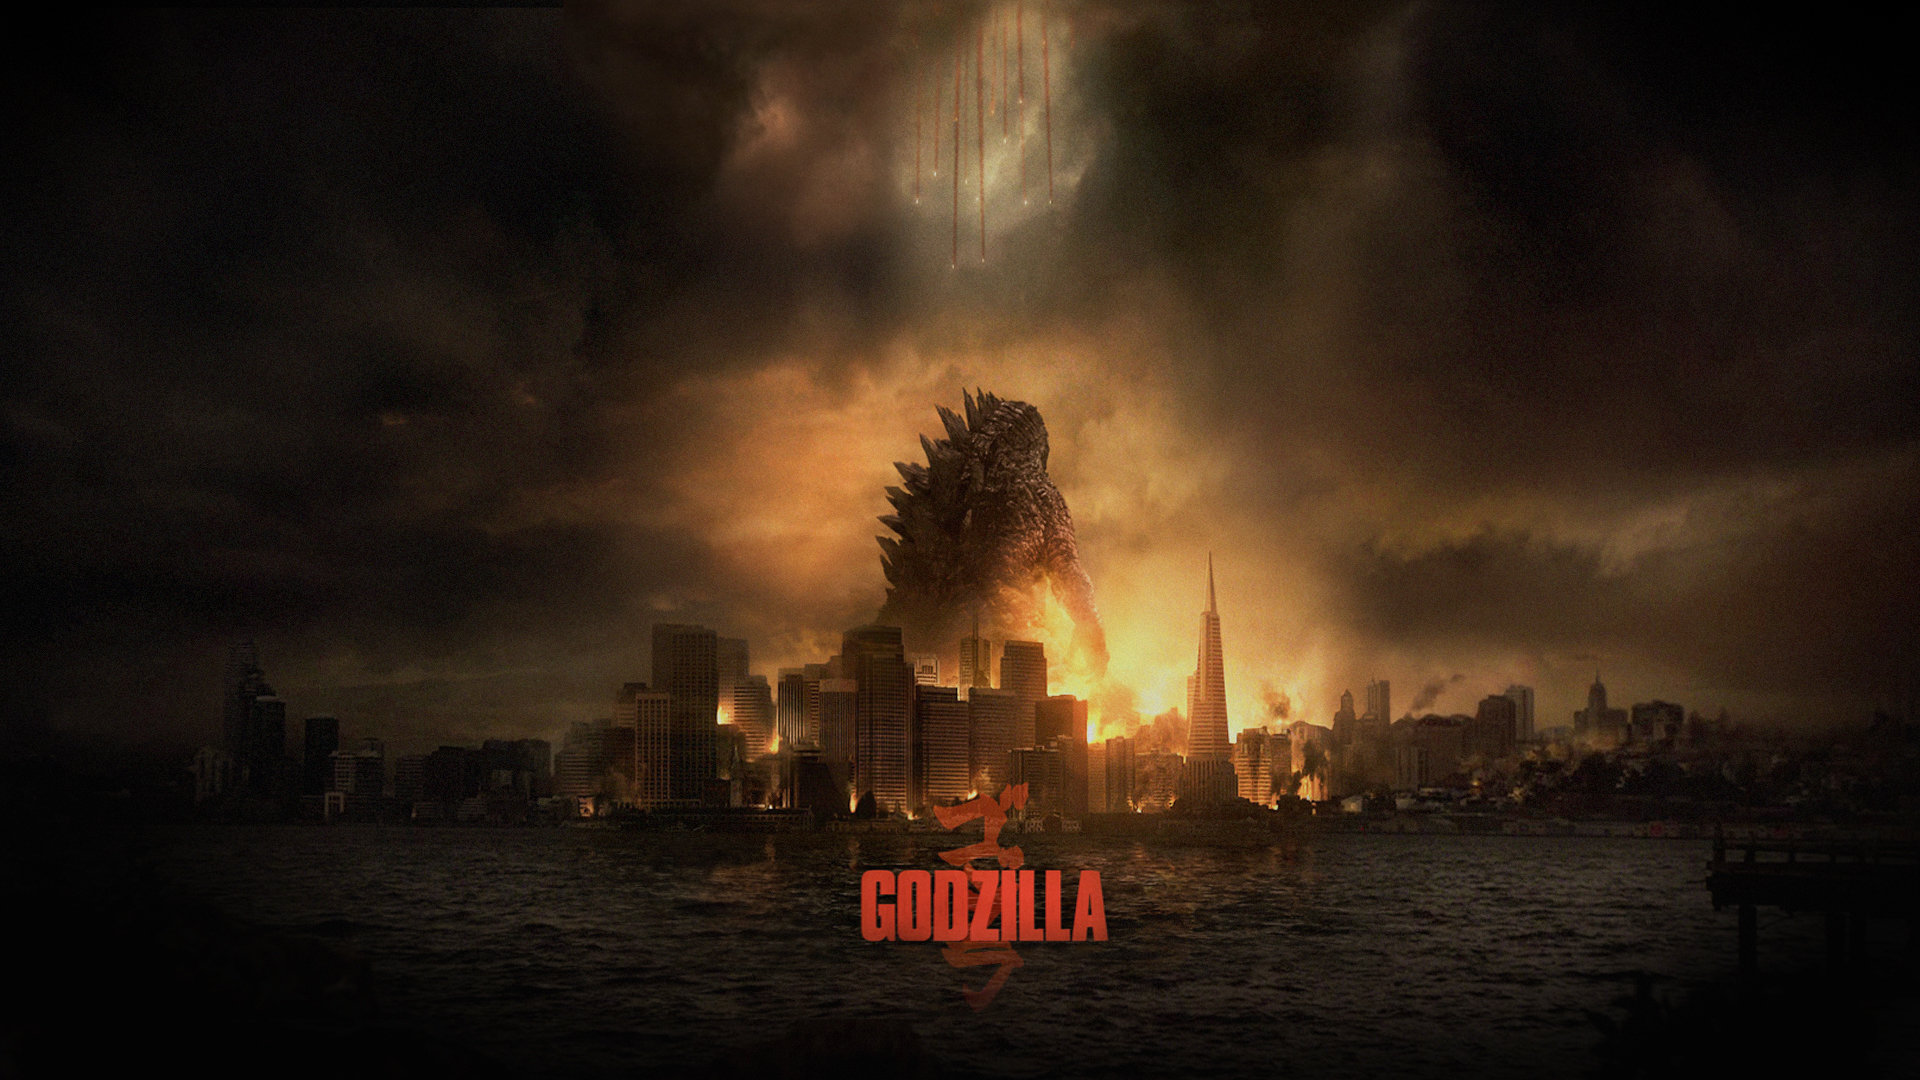 Best Godzilla (2014) background ID:315621 for High Resolution full hd 1920x1080 computer